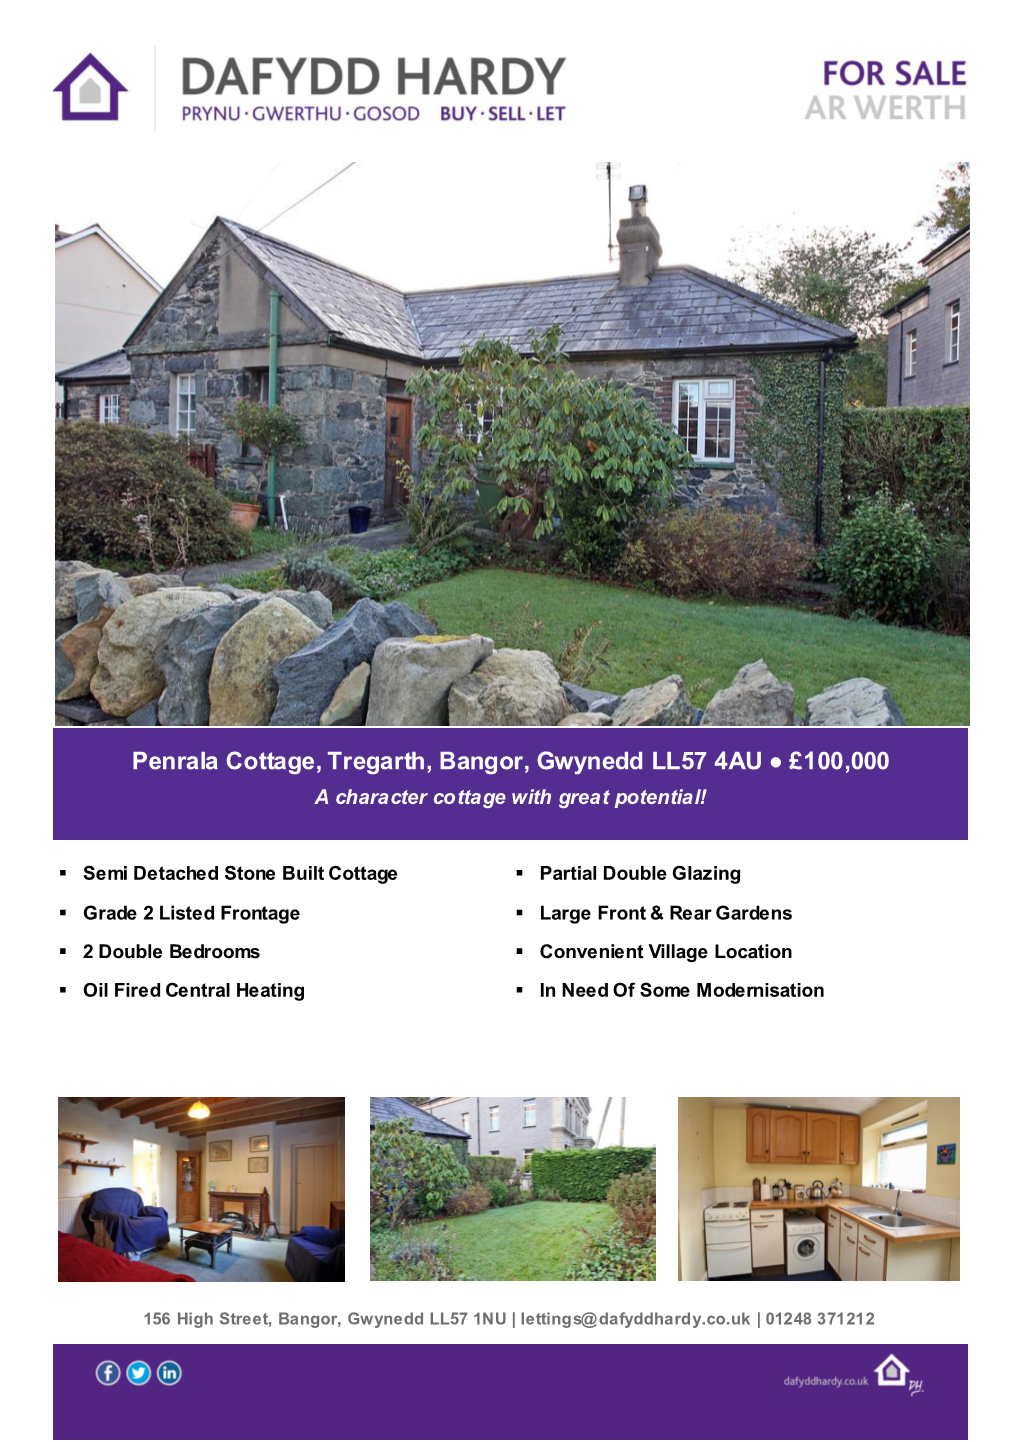 Penrala Cottage, Tregarth, Bangor, Gwynedd LL57 4AU ● £100,000 a Character Cottage with Great Potential!